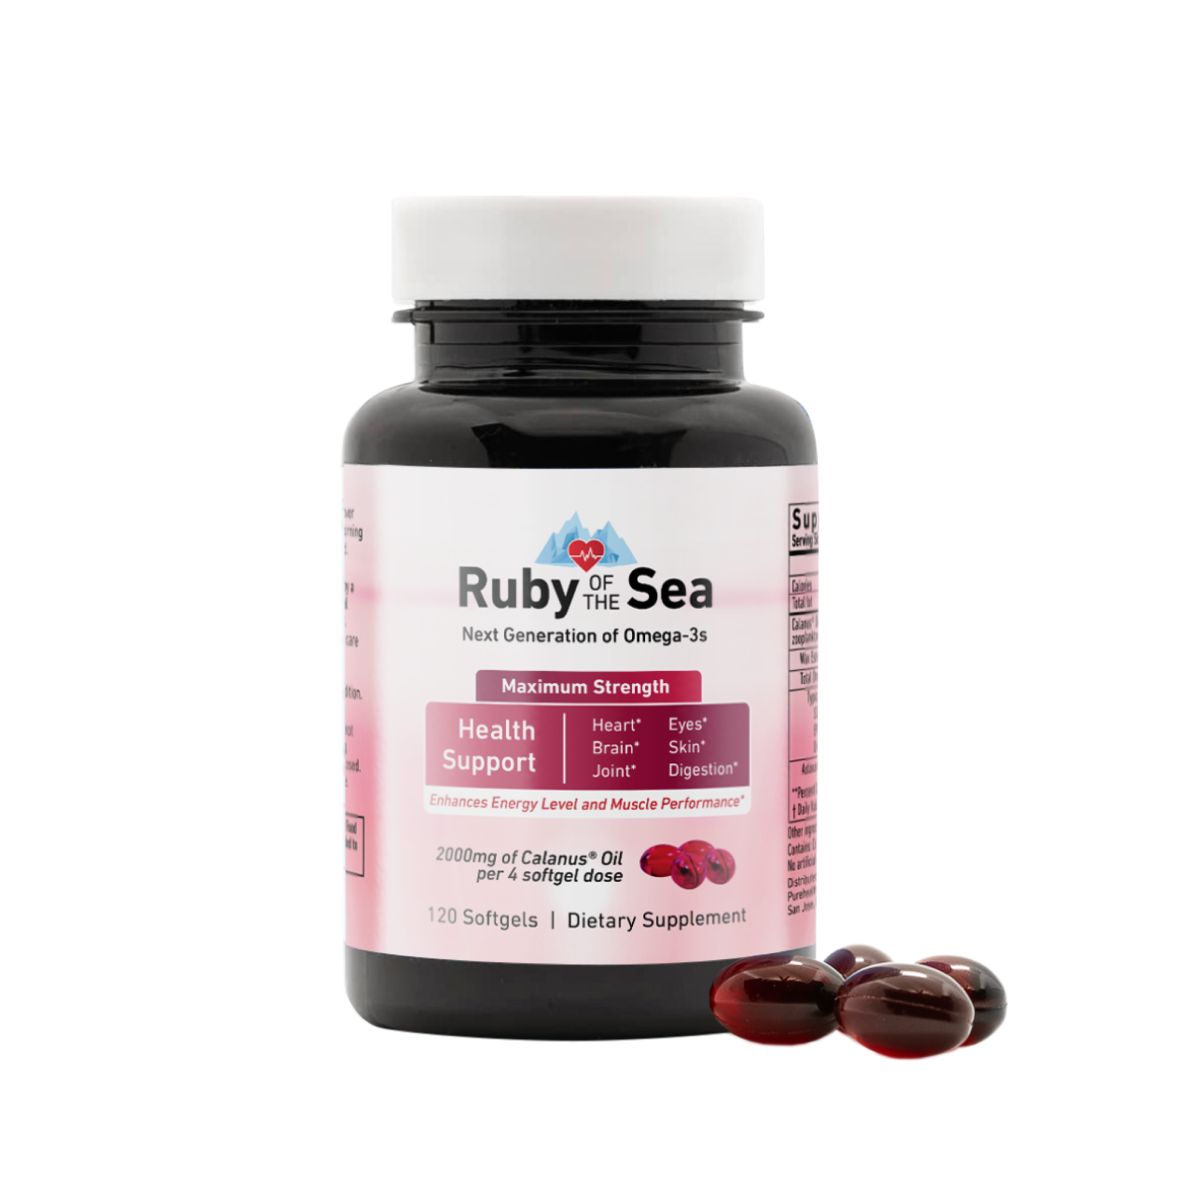 Ruby of the Sea® Calanus Oil